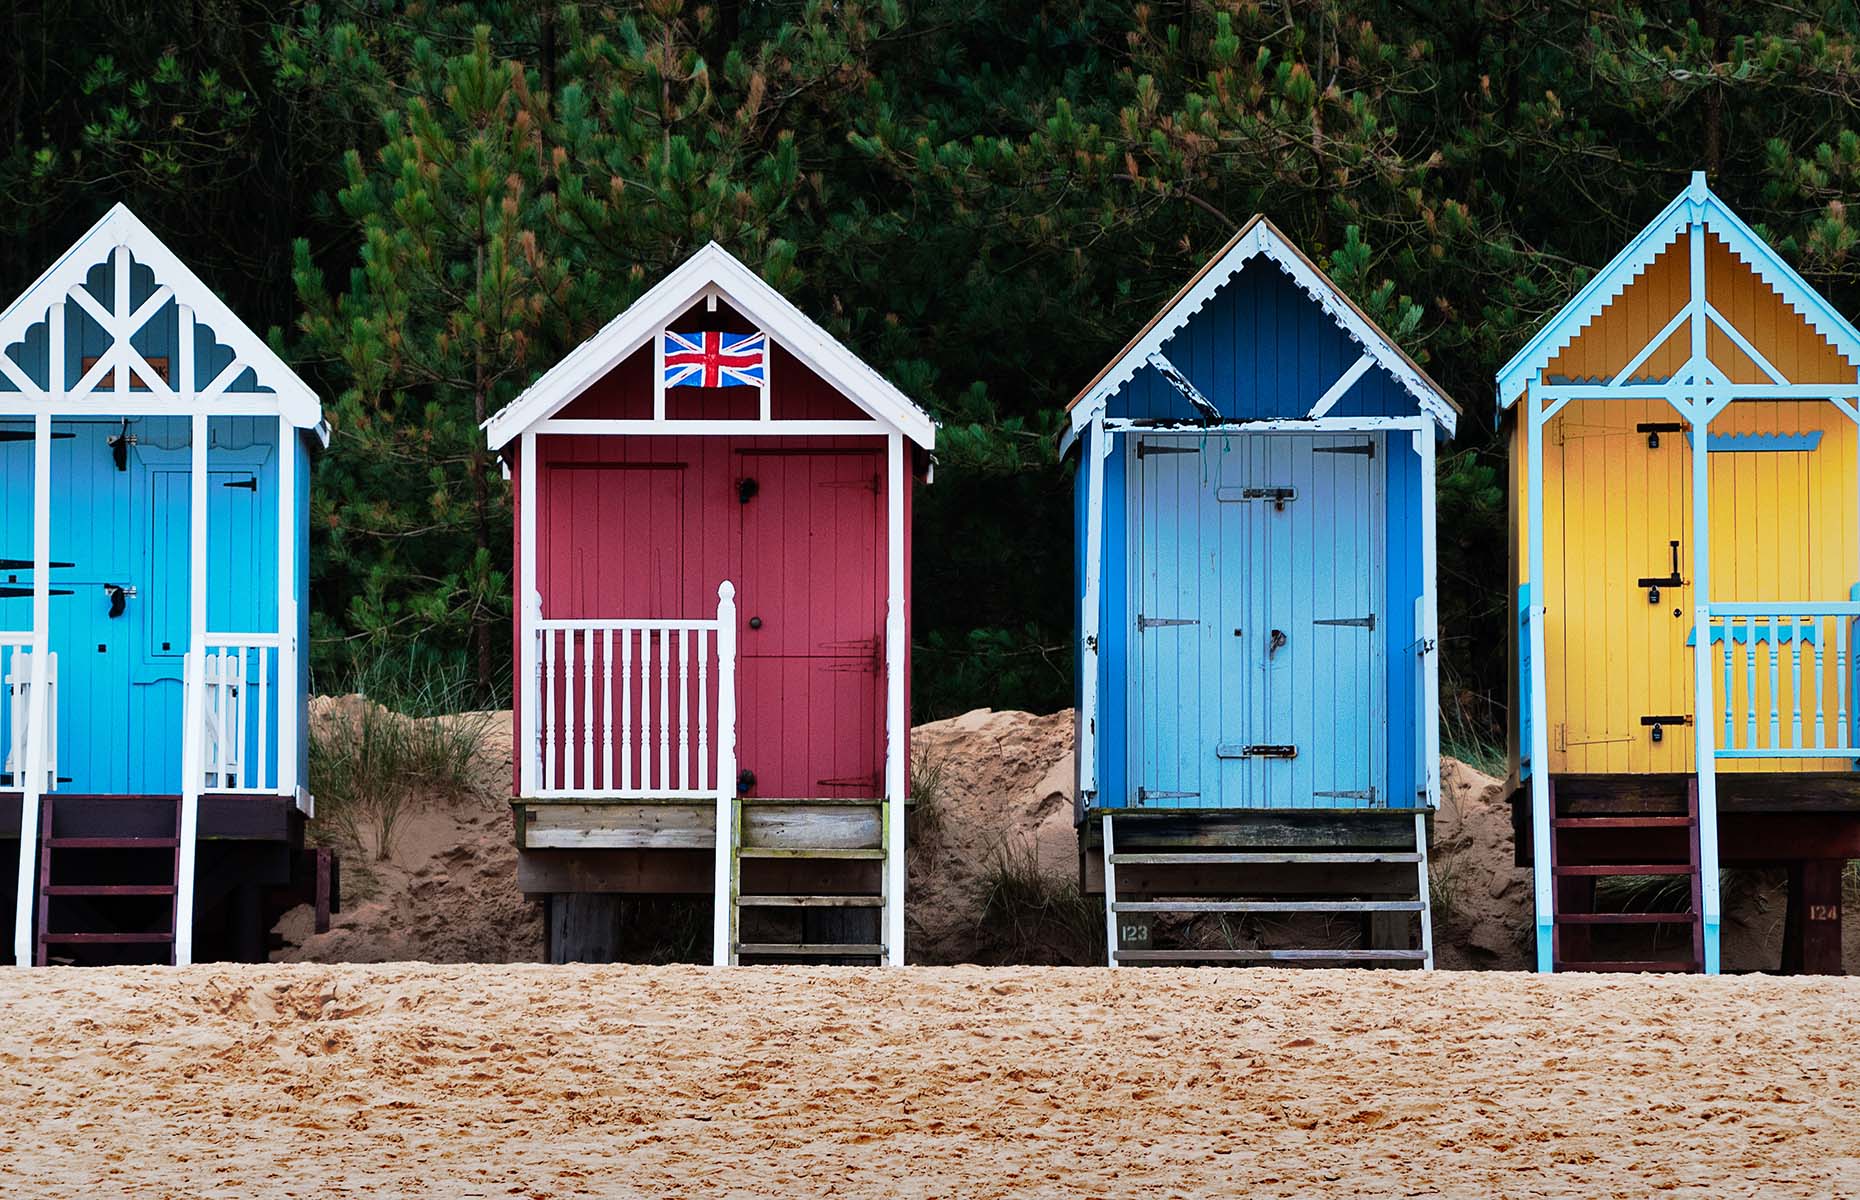 Norfolk beach huts out of season (Image: john mobbs/Shutterstock)